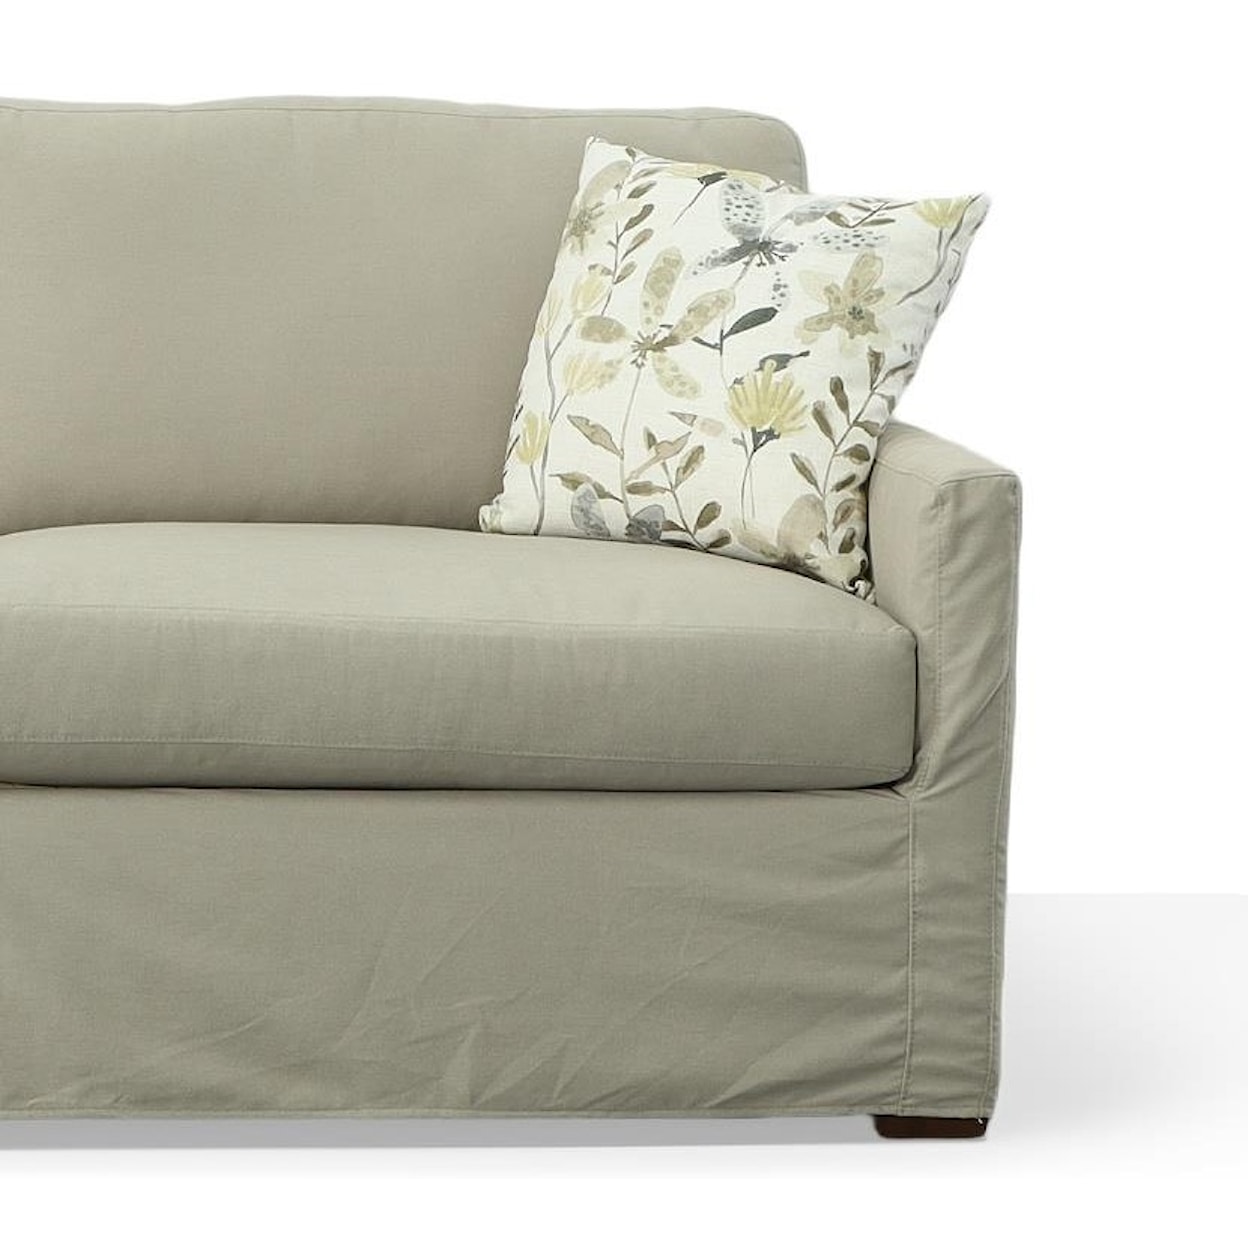 Stone & Leigh Furniture Savannah Slipcover Slipcover Sofa